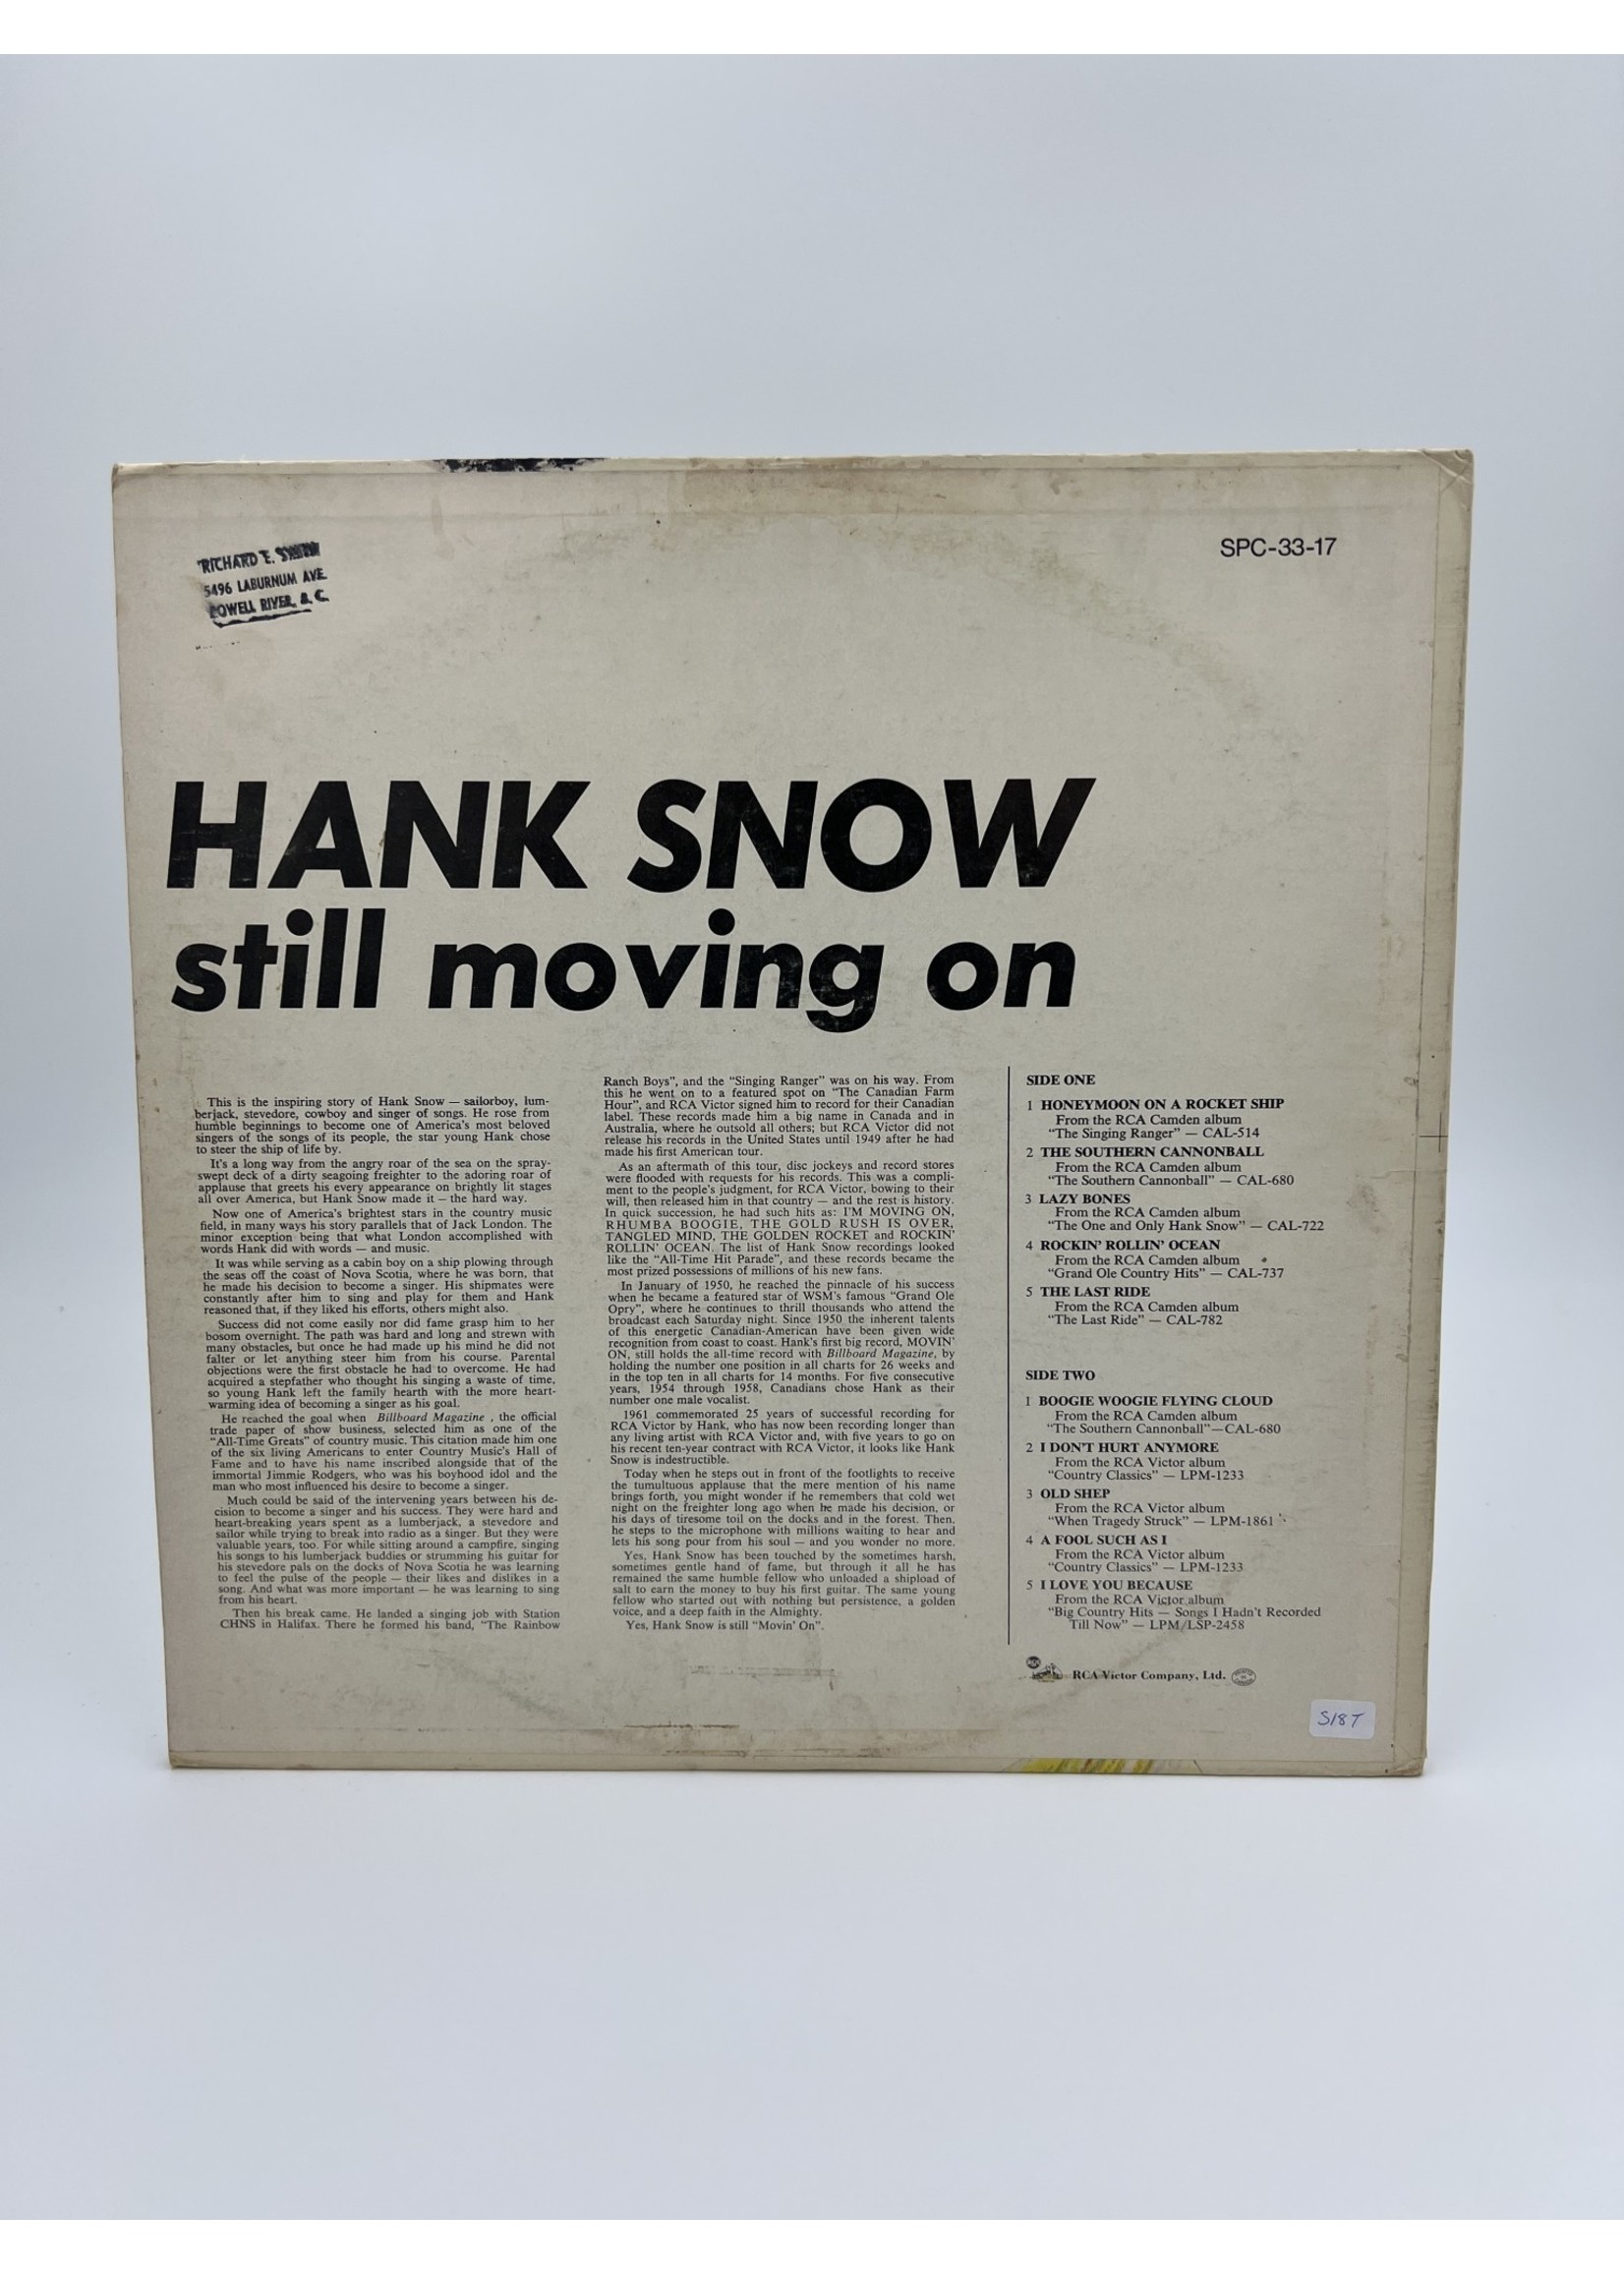 LP The Hank Snow Four Square Album LP RECORD